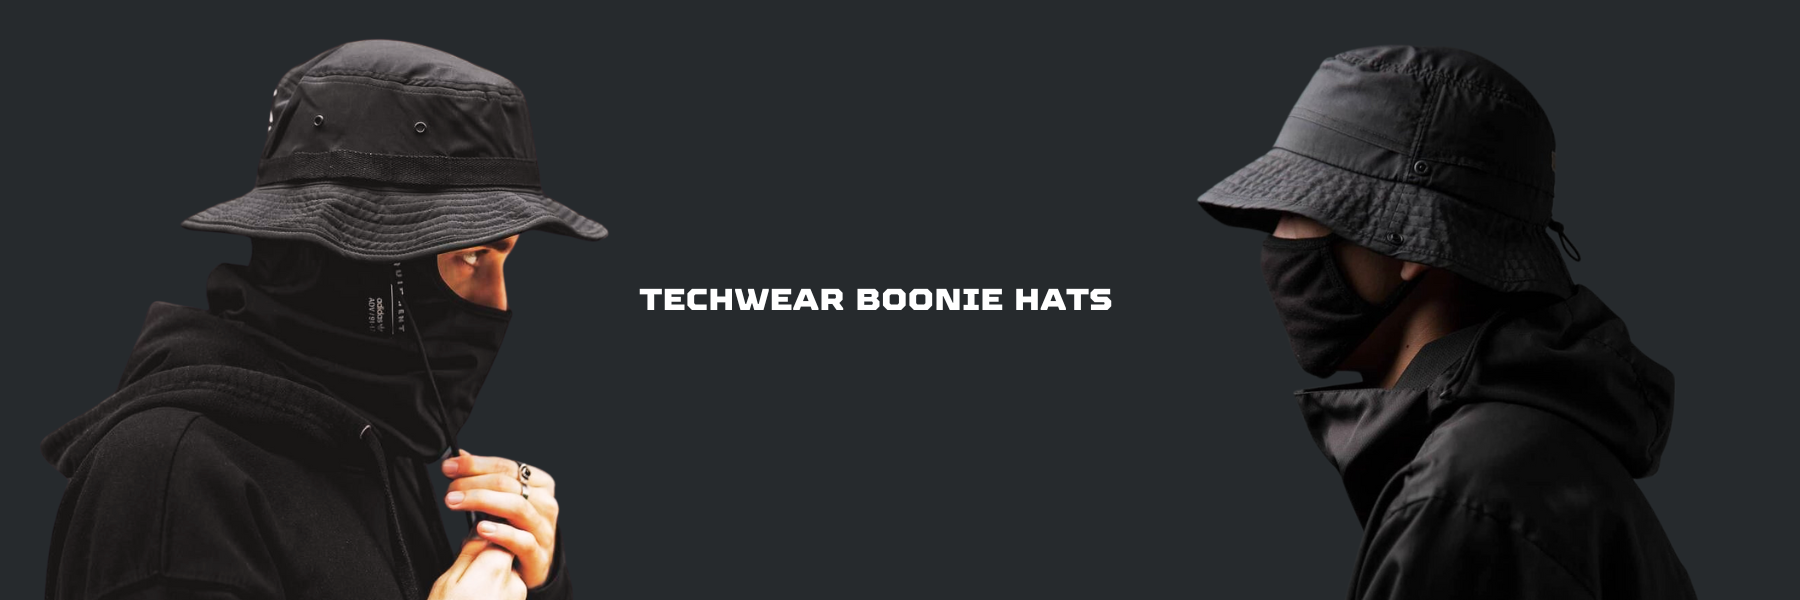 techwear boonie hat